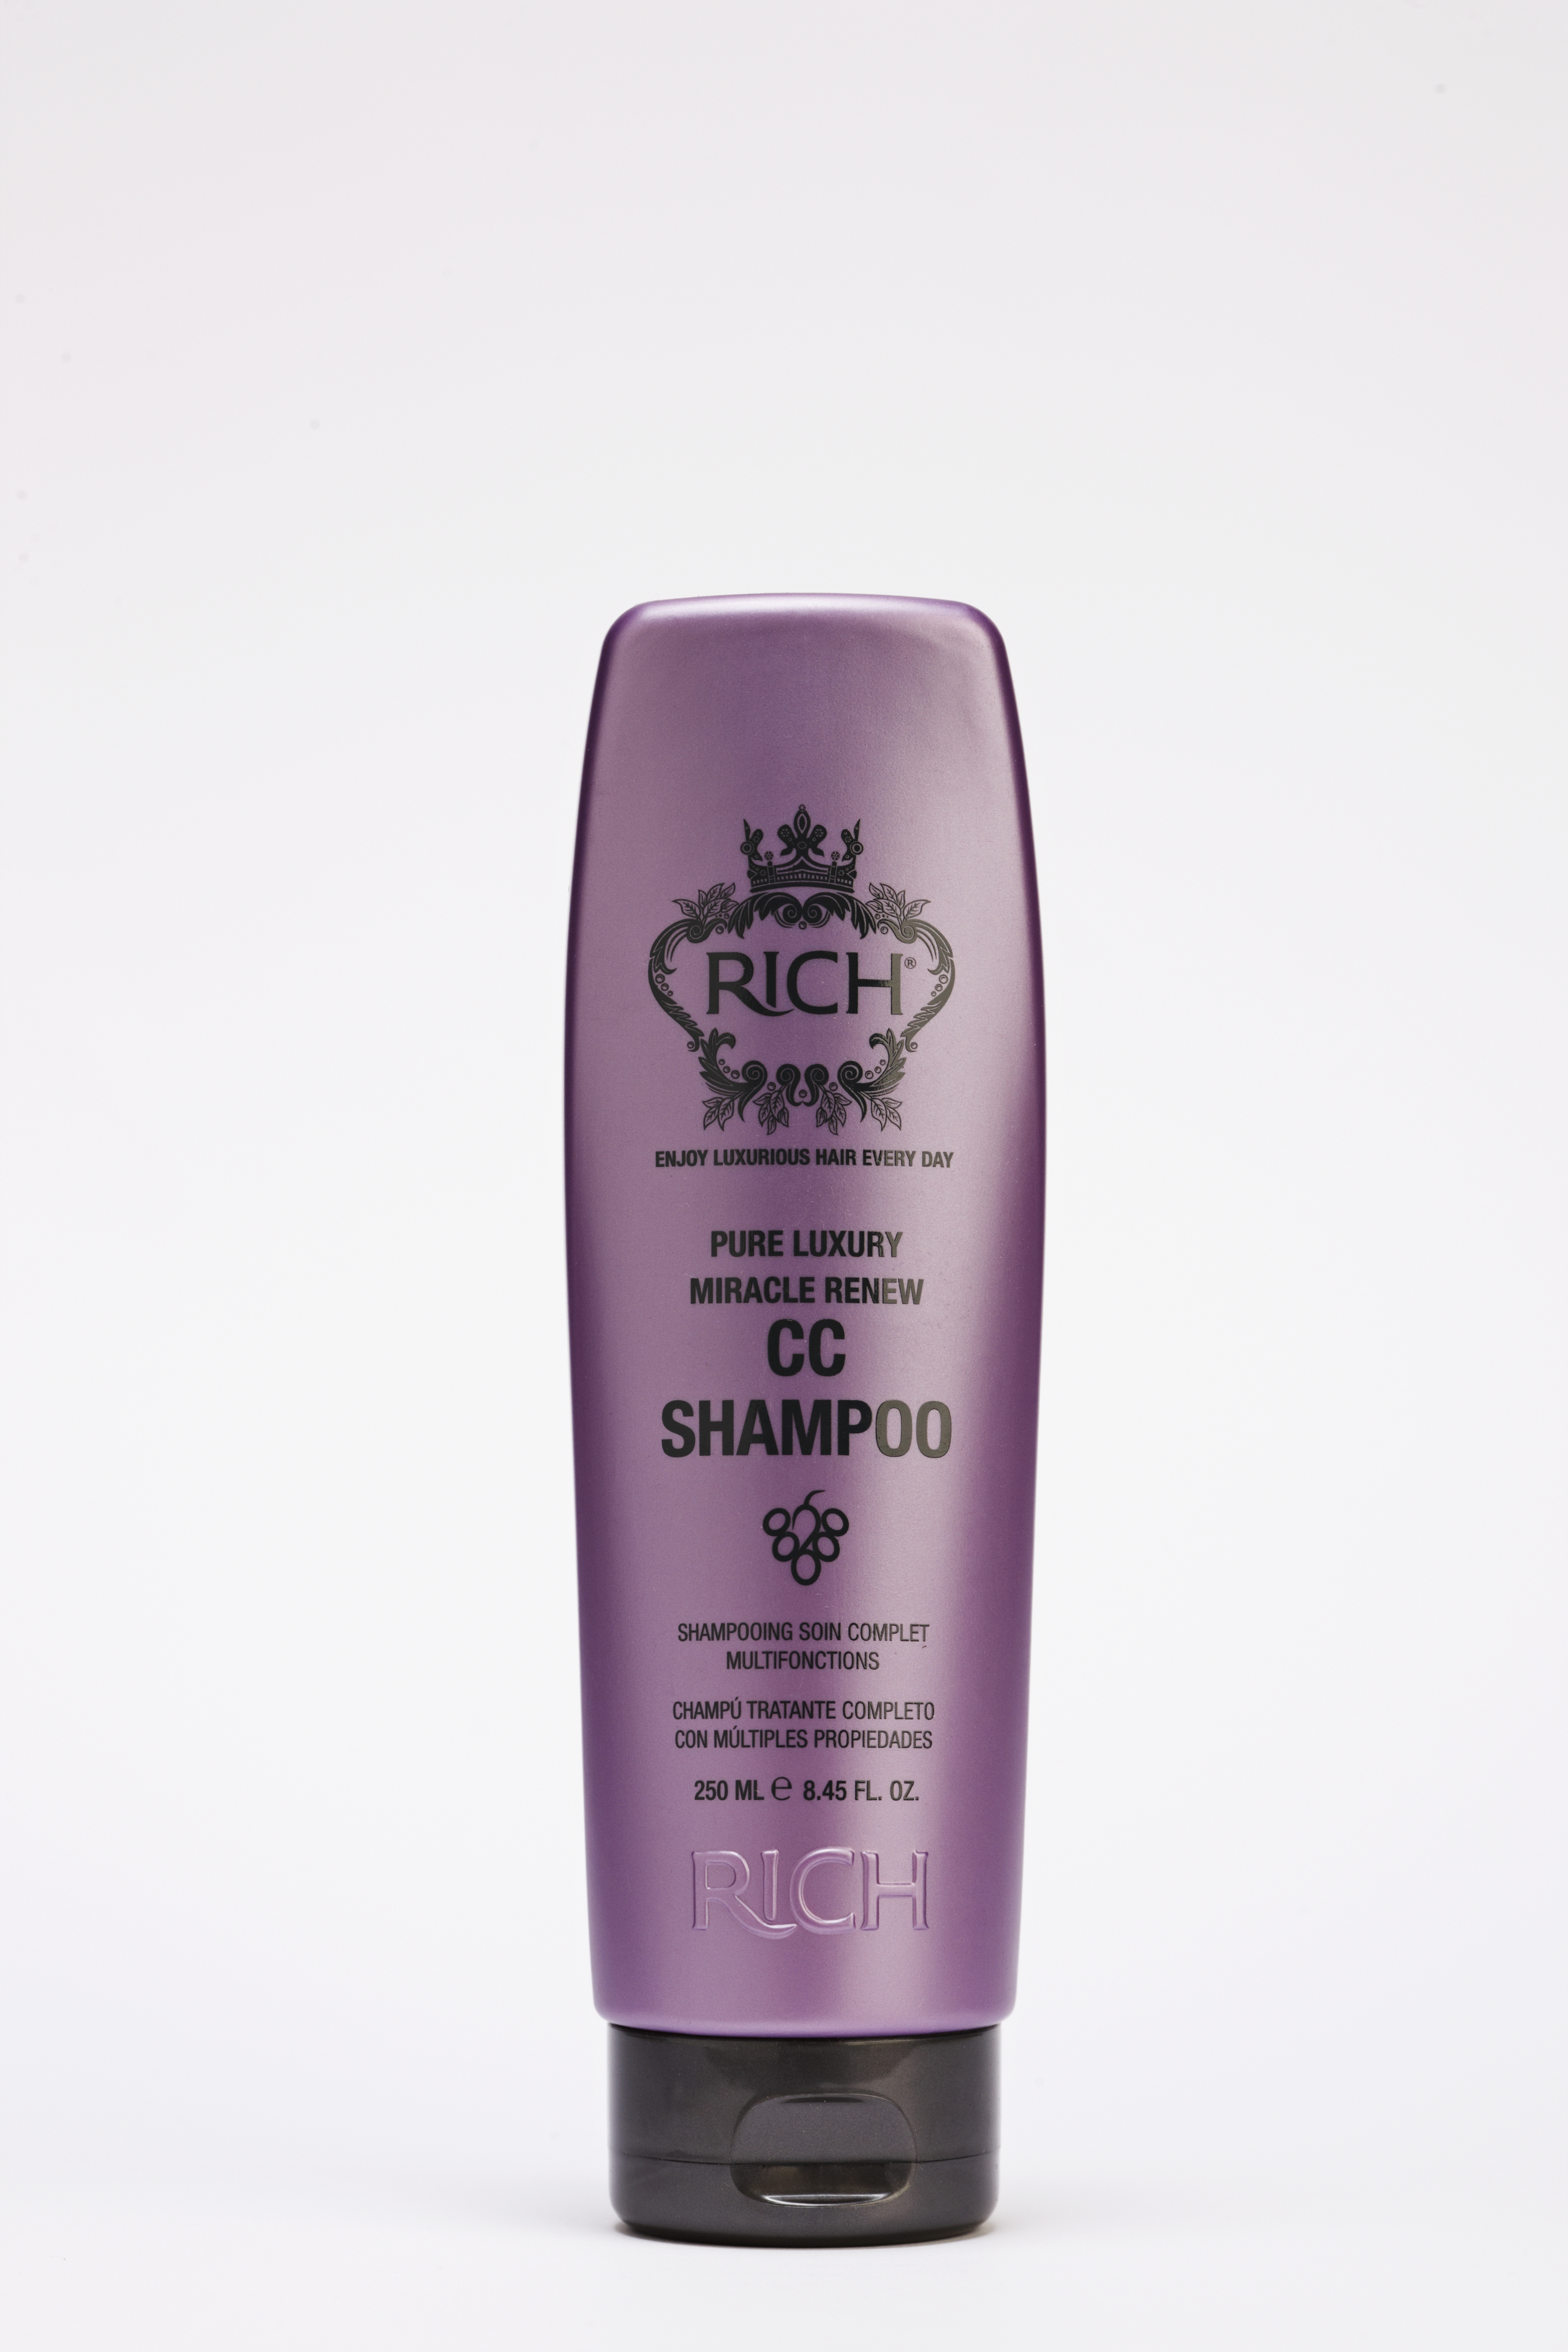 RICH Pure Luxury Miracle Renew CC Shampoo 250ml